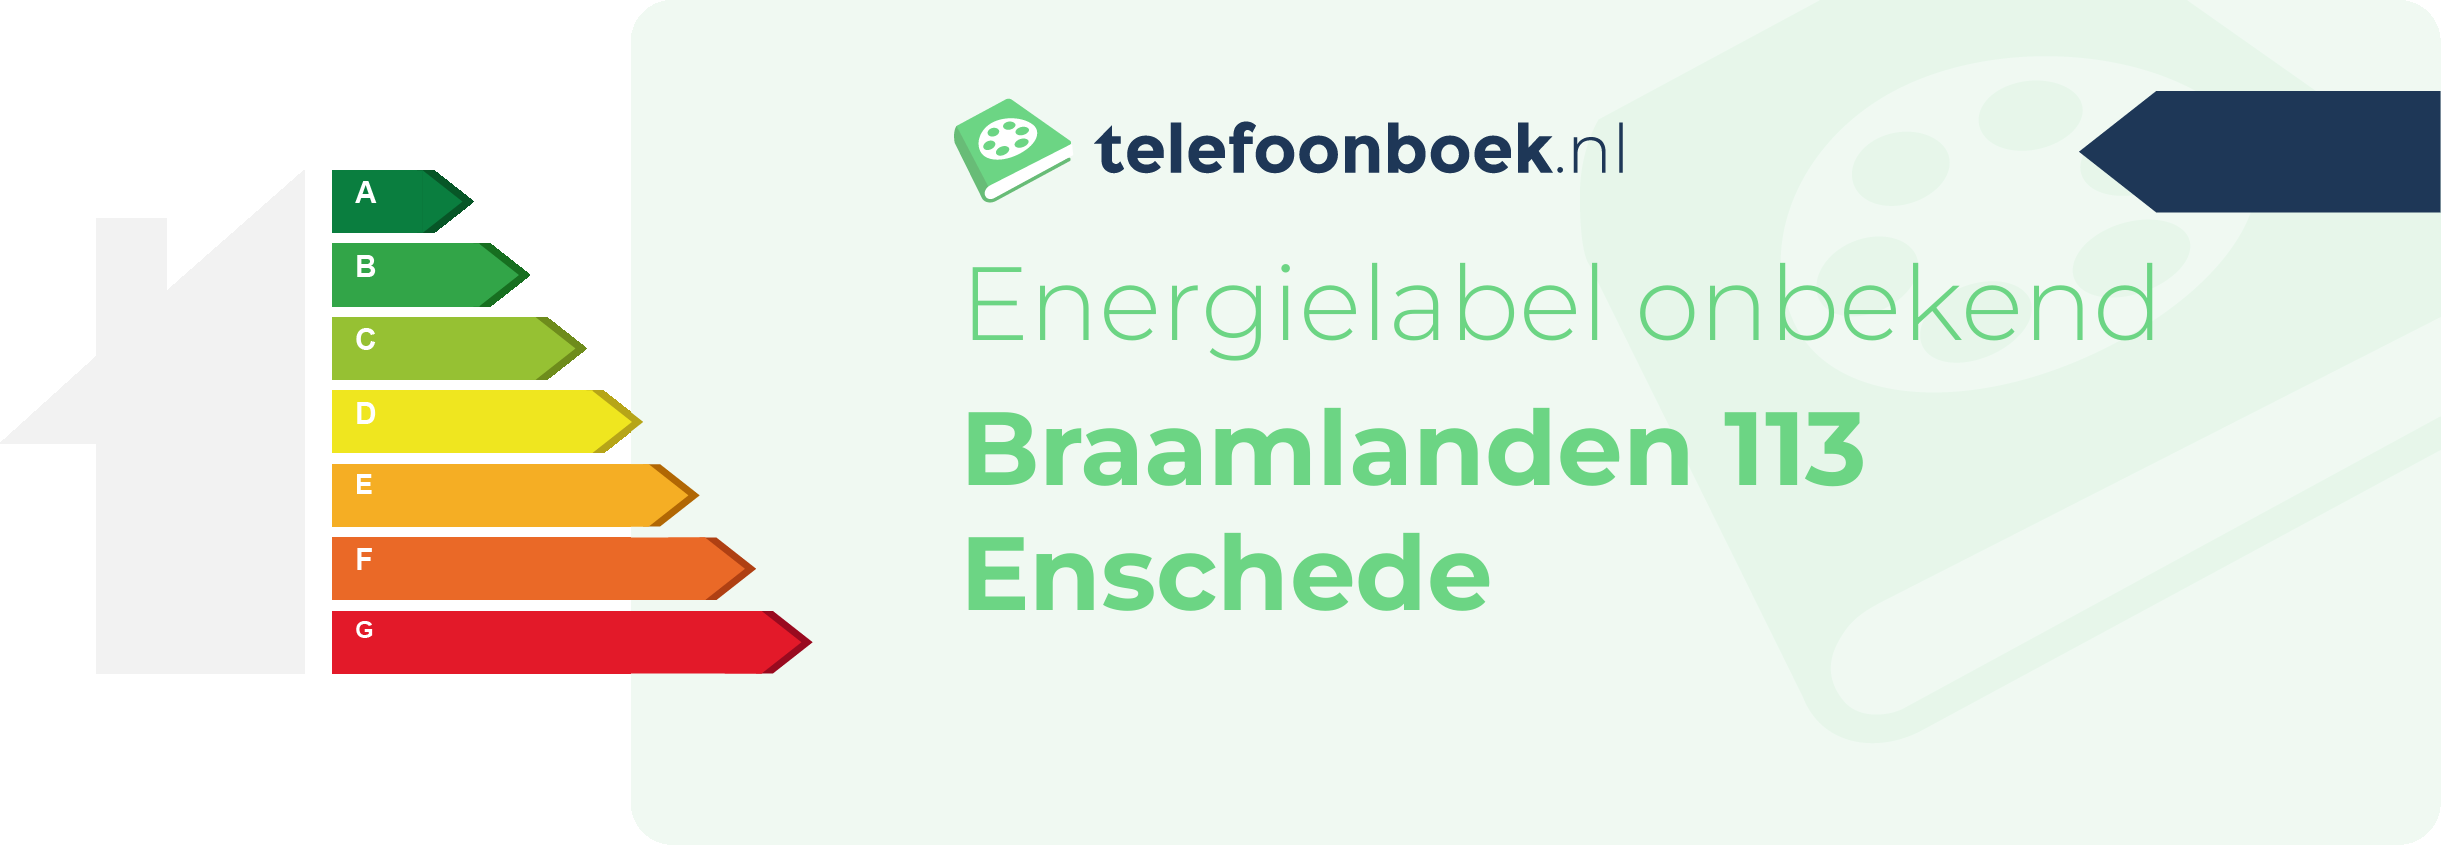 Energielabel Braamlanden 113 Enschede